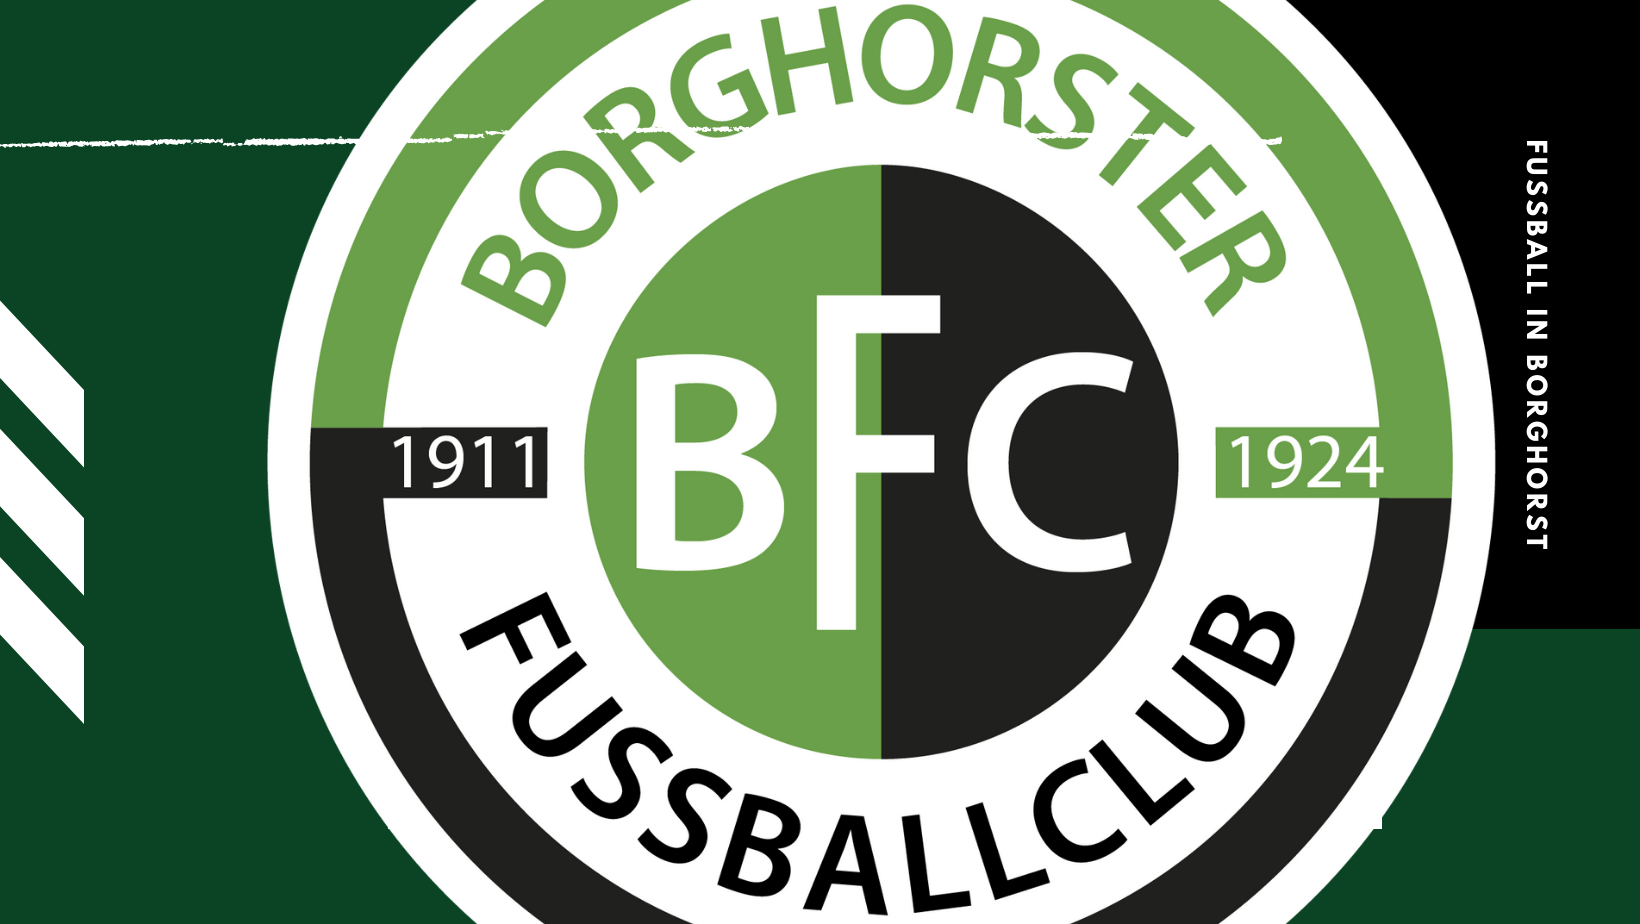 Kontakt | Borghorster FC 1911/1924 e.V.